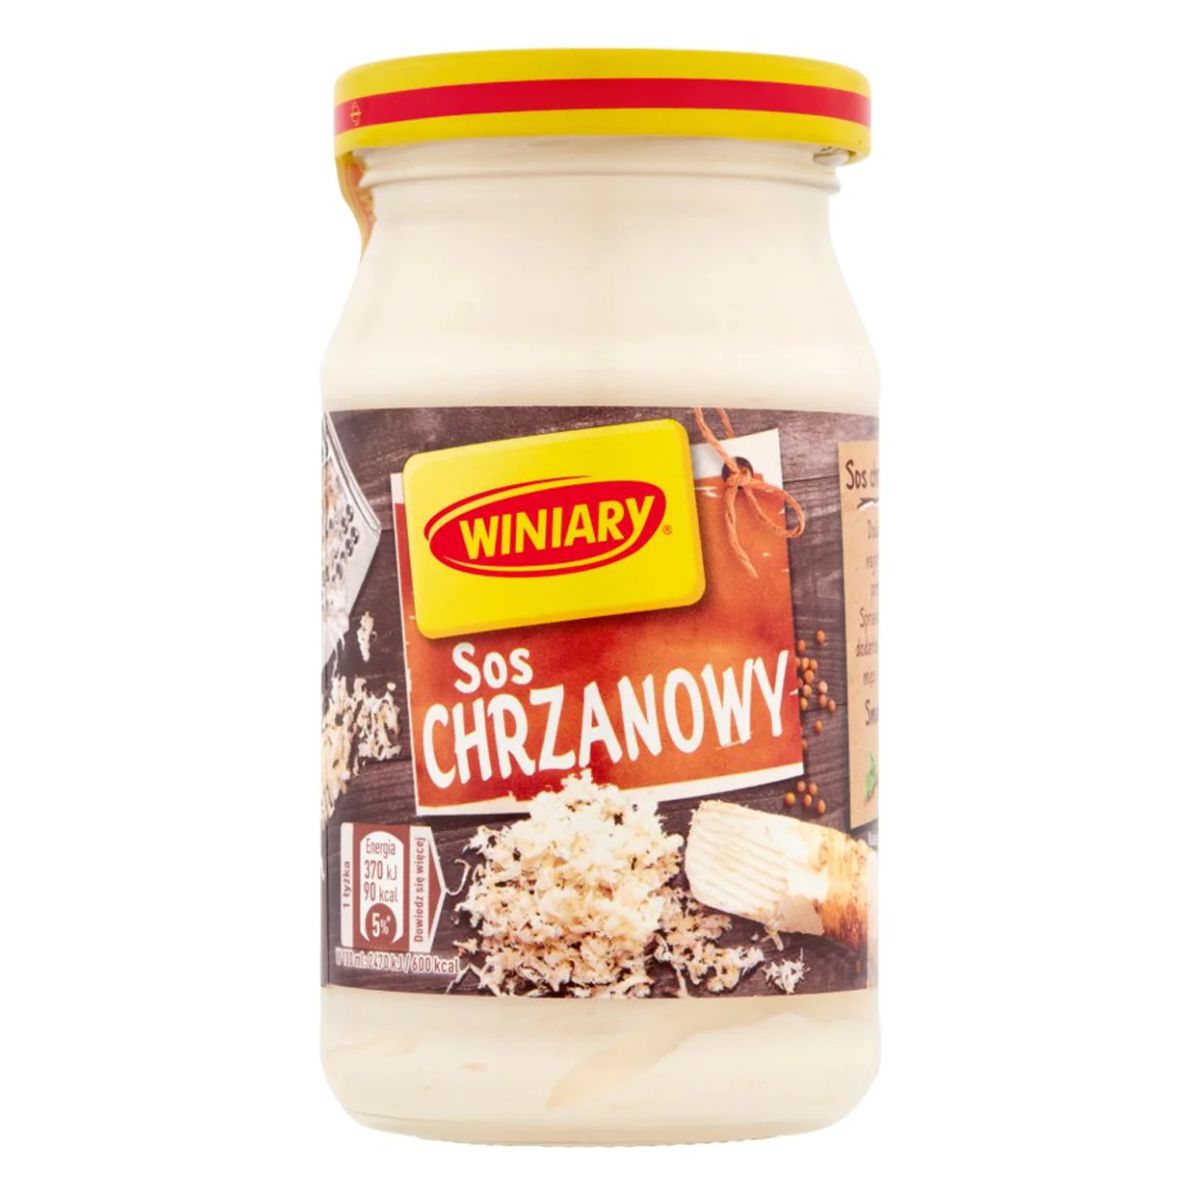 A jar of Winiary - Horseradish Sauce Chrzanowy - 250ml on a white background.